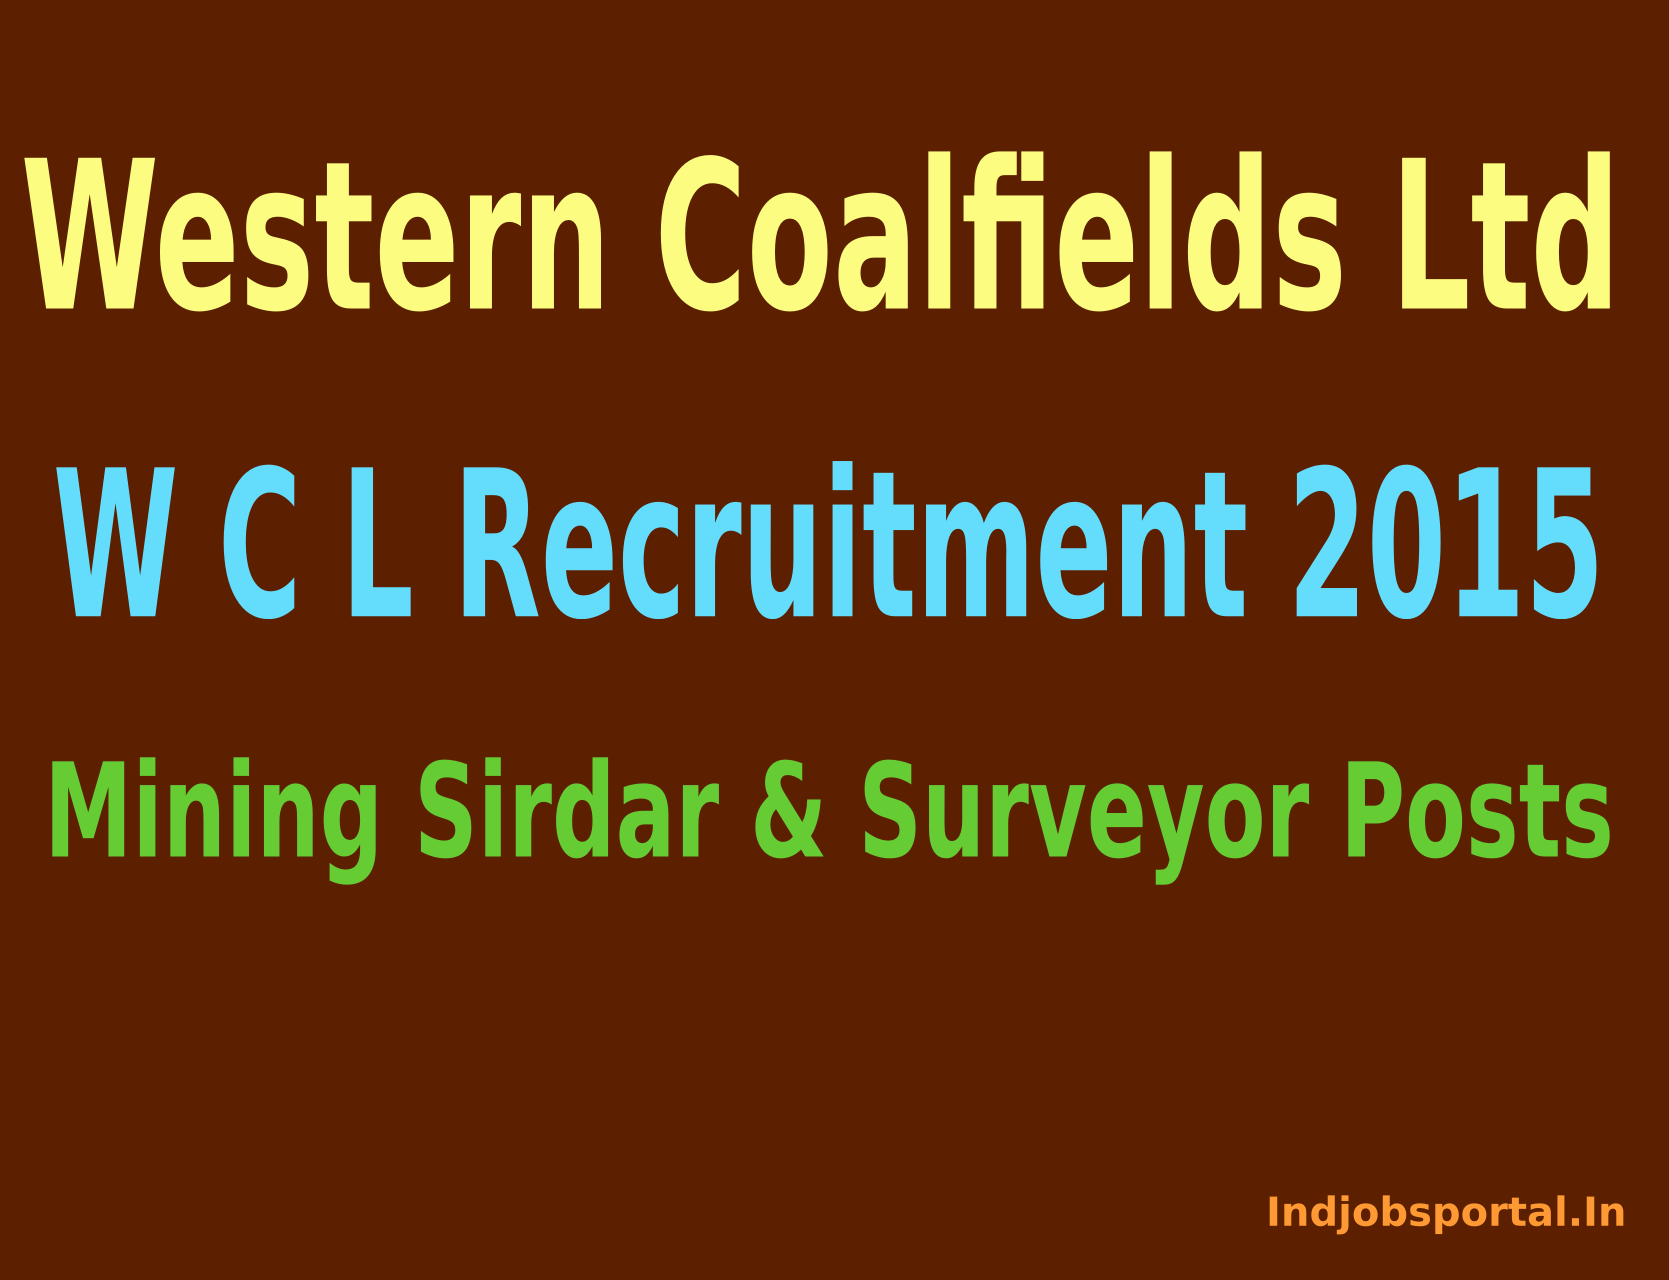 Western Coalfields Ltd Recruitment 2015 For 465 Mining Sirdar & Surveyor Posts